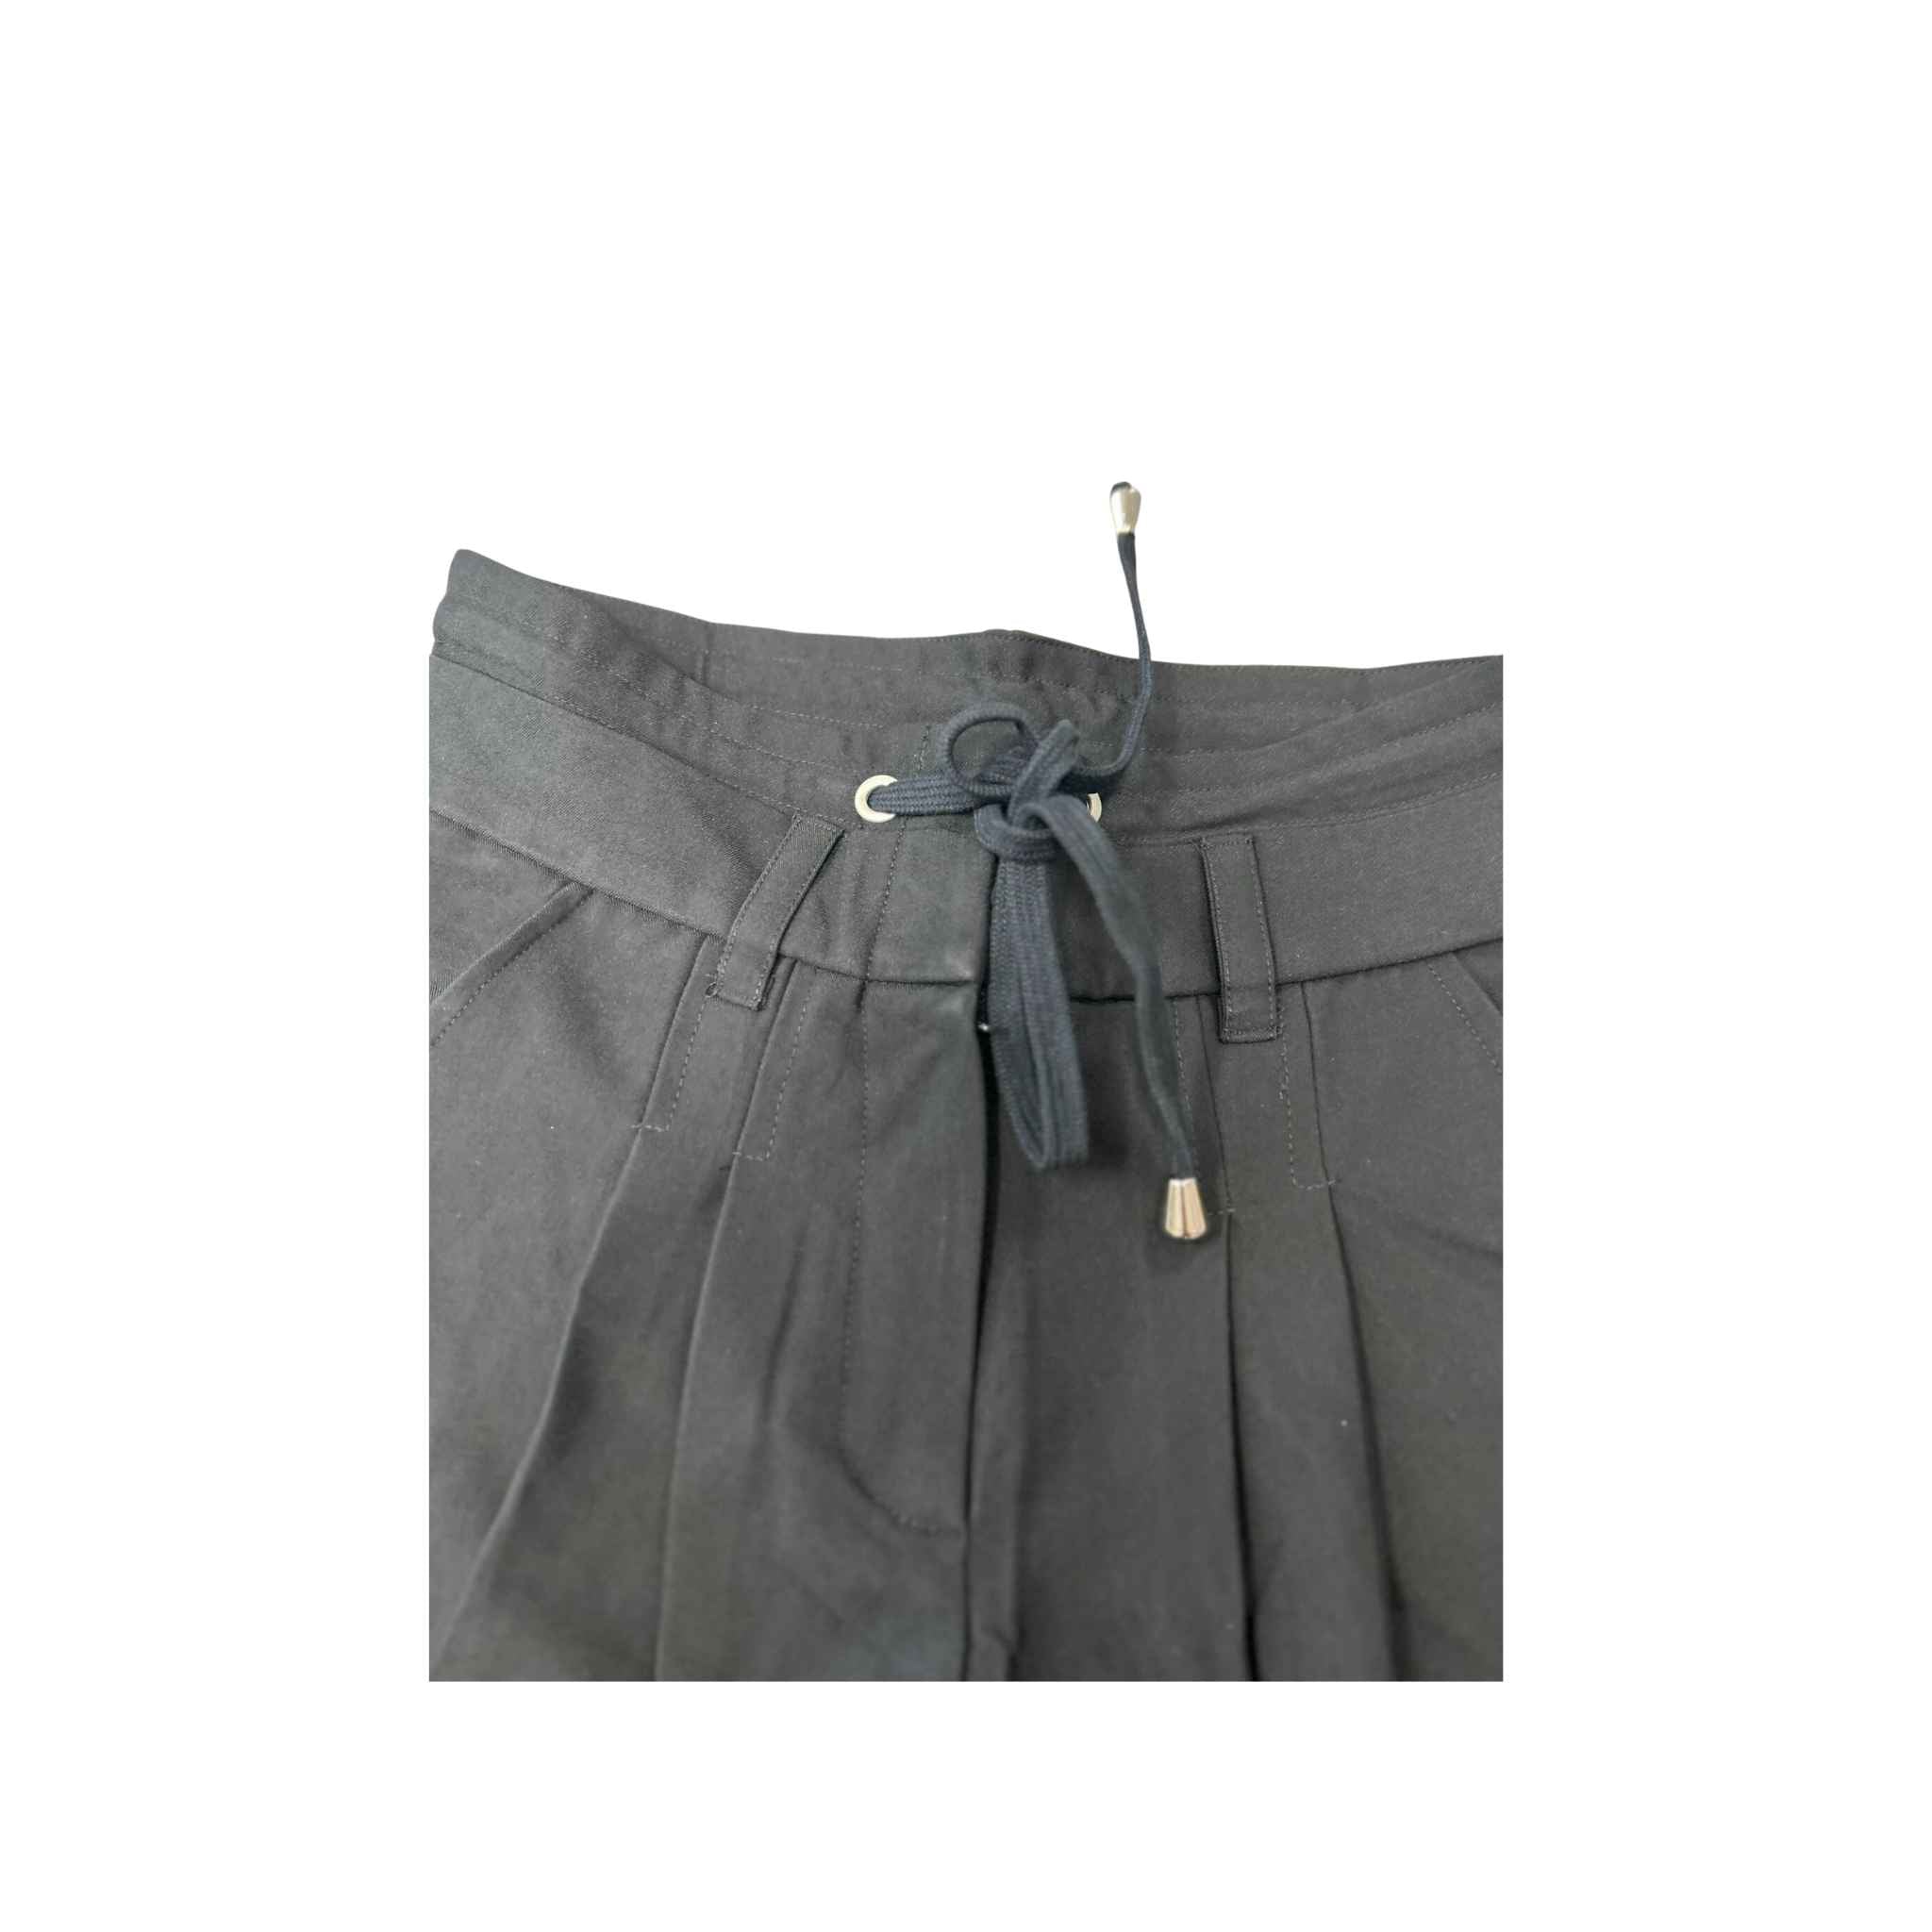 Black Wide Leg Dress Pants with Drawstring Waist